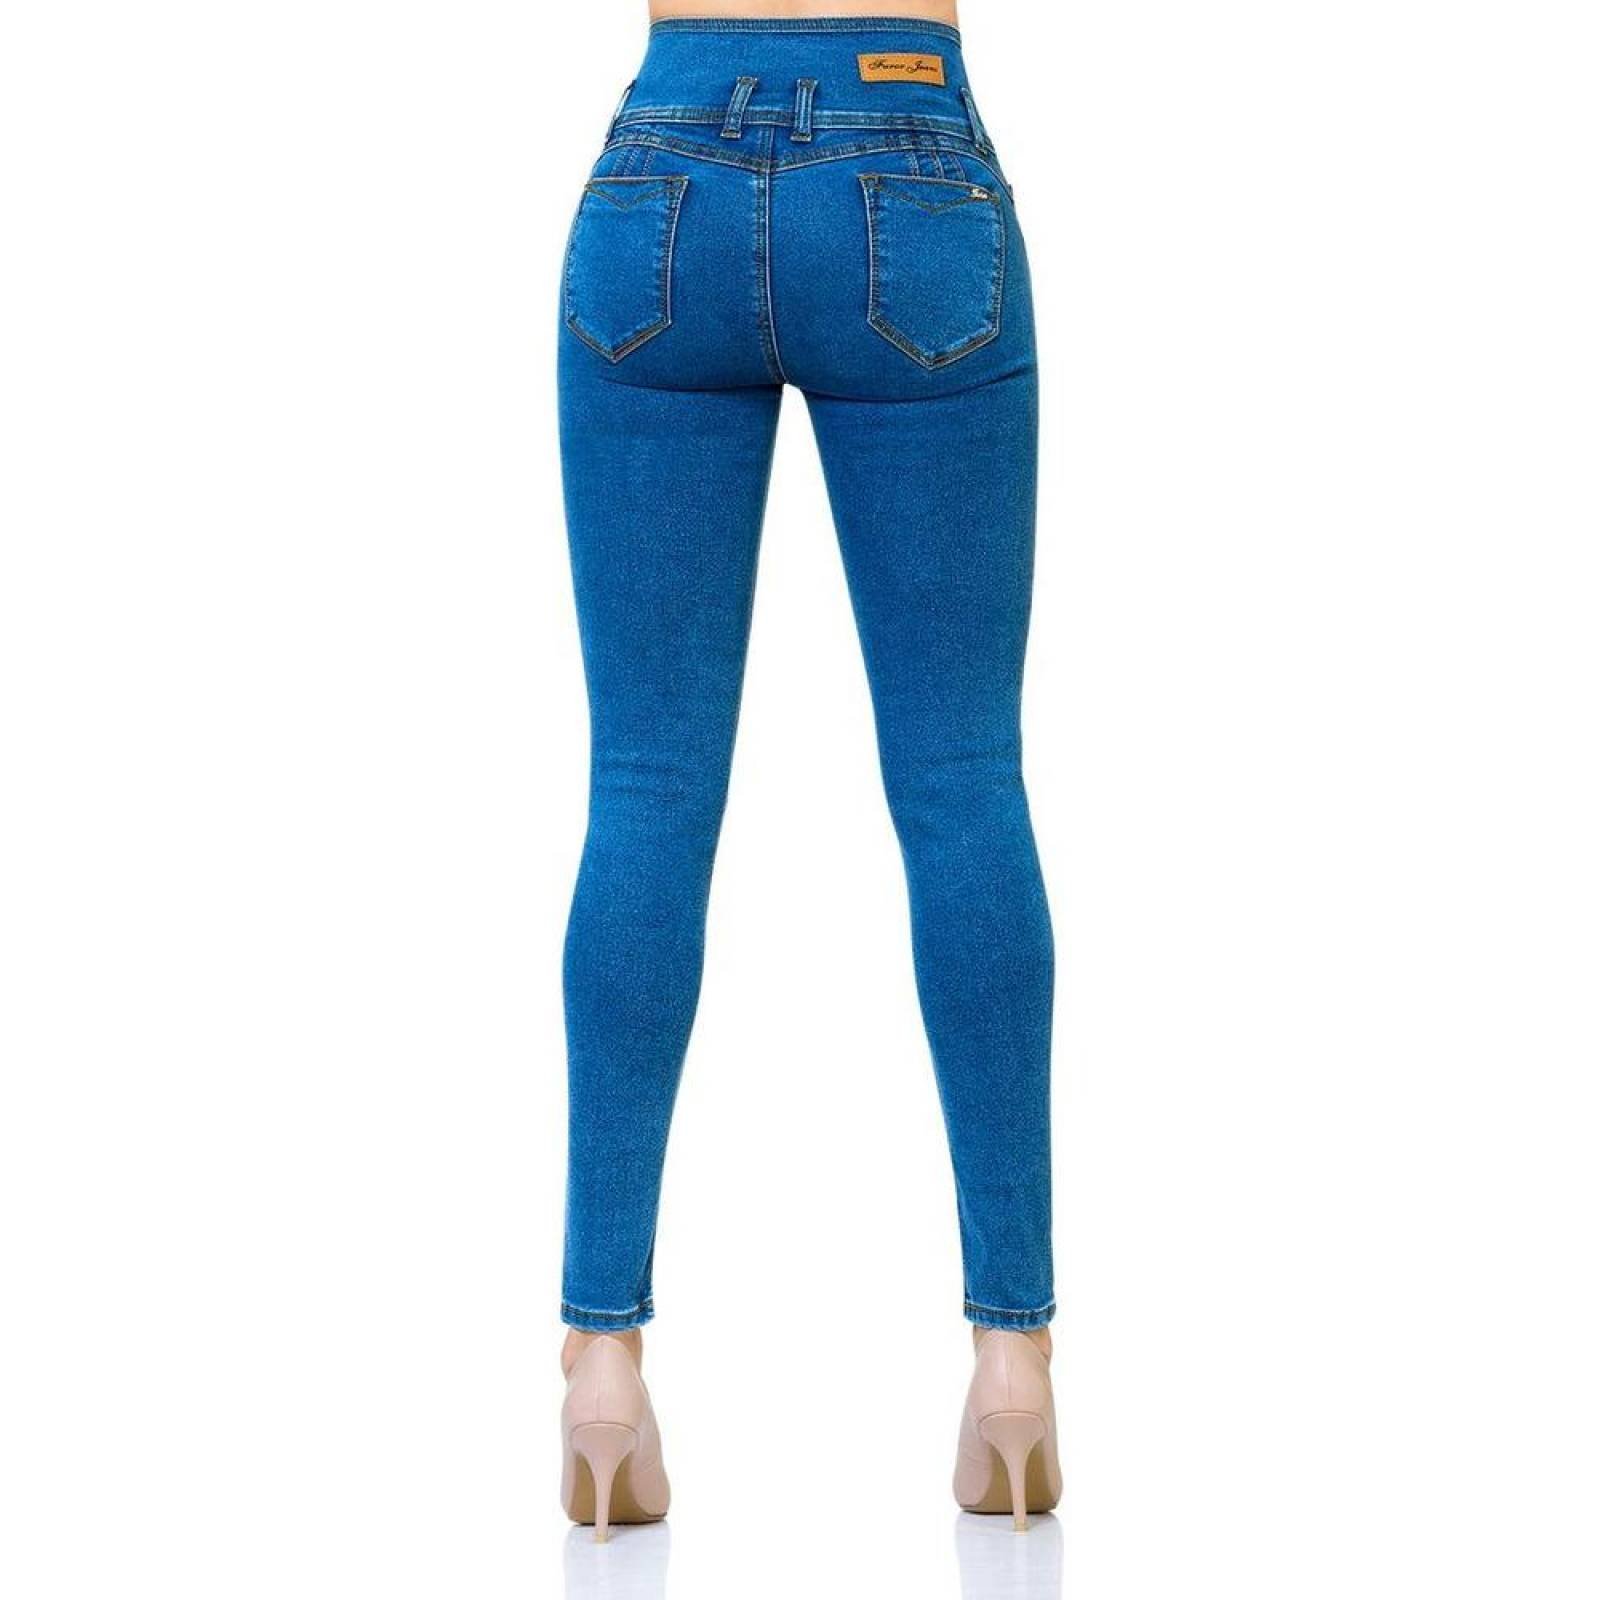 Jeans Básico Mujer Furor Stone 62105009 Mezclilla Stretch 